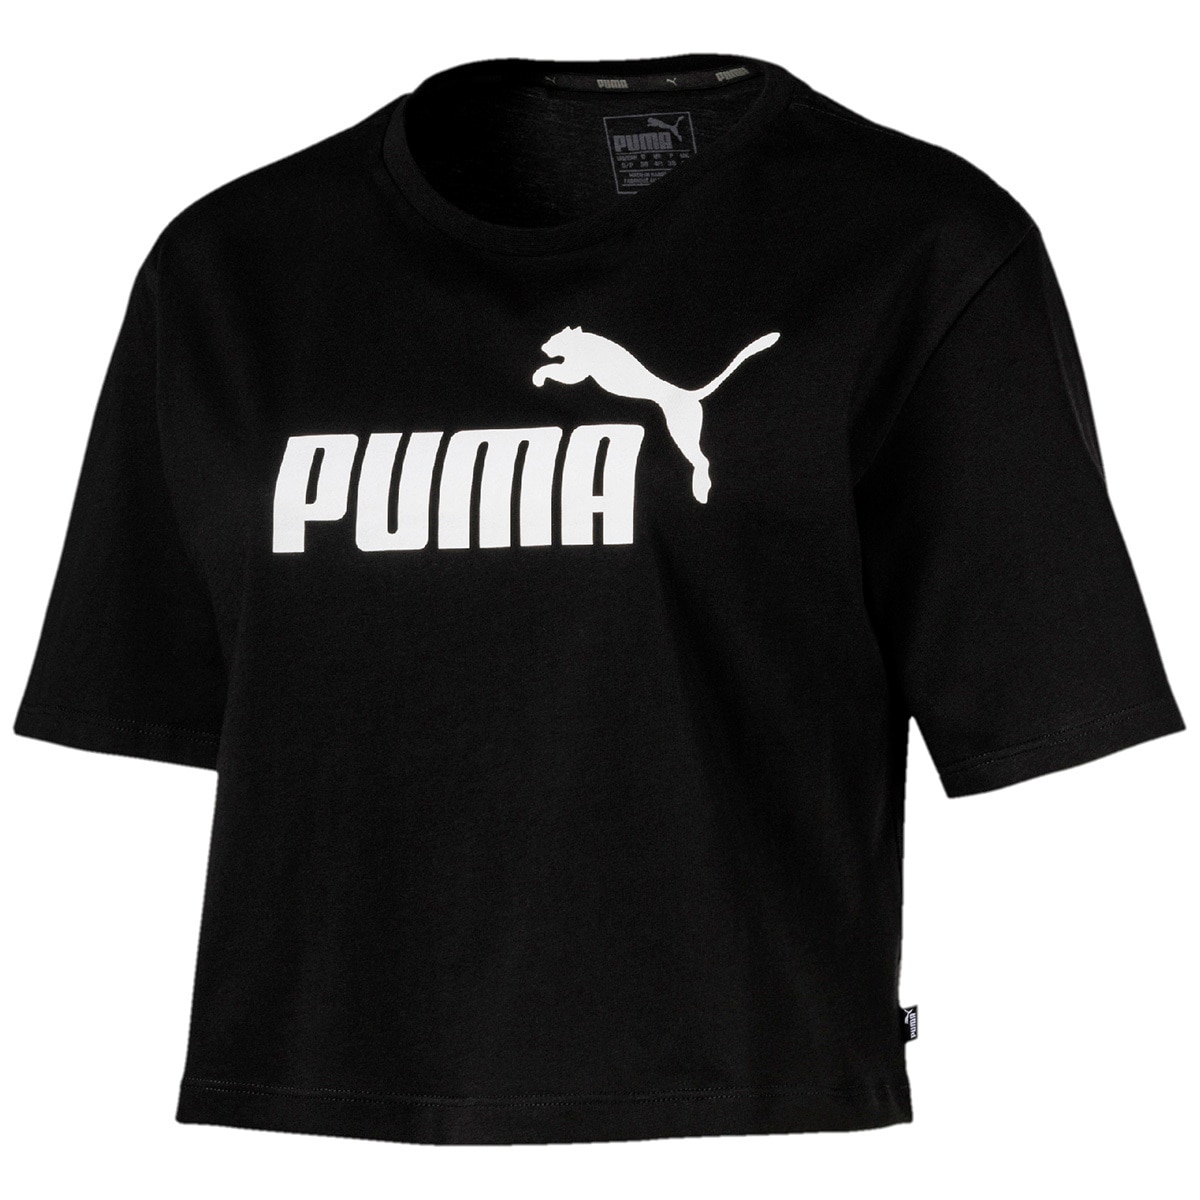 Puma - Women's Crop Tee